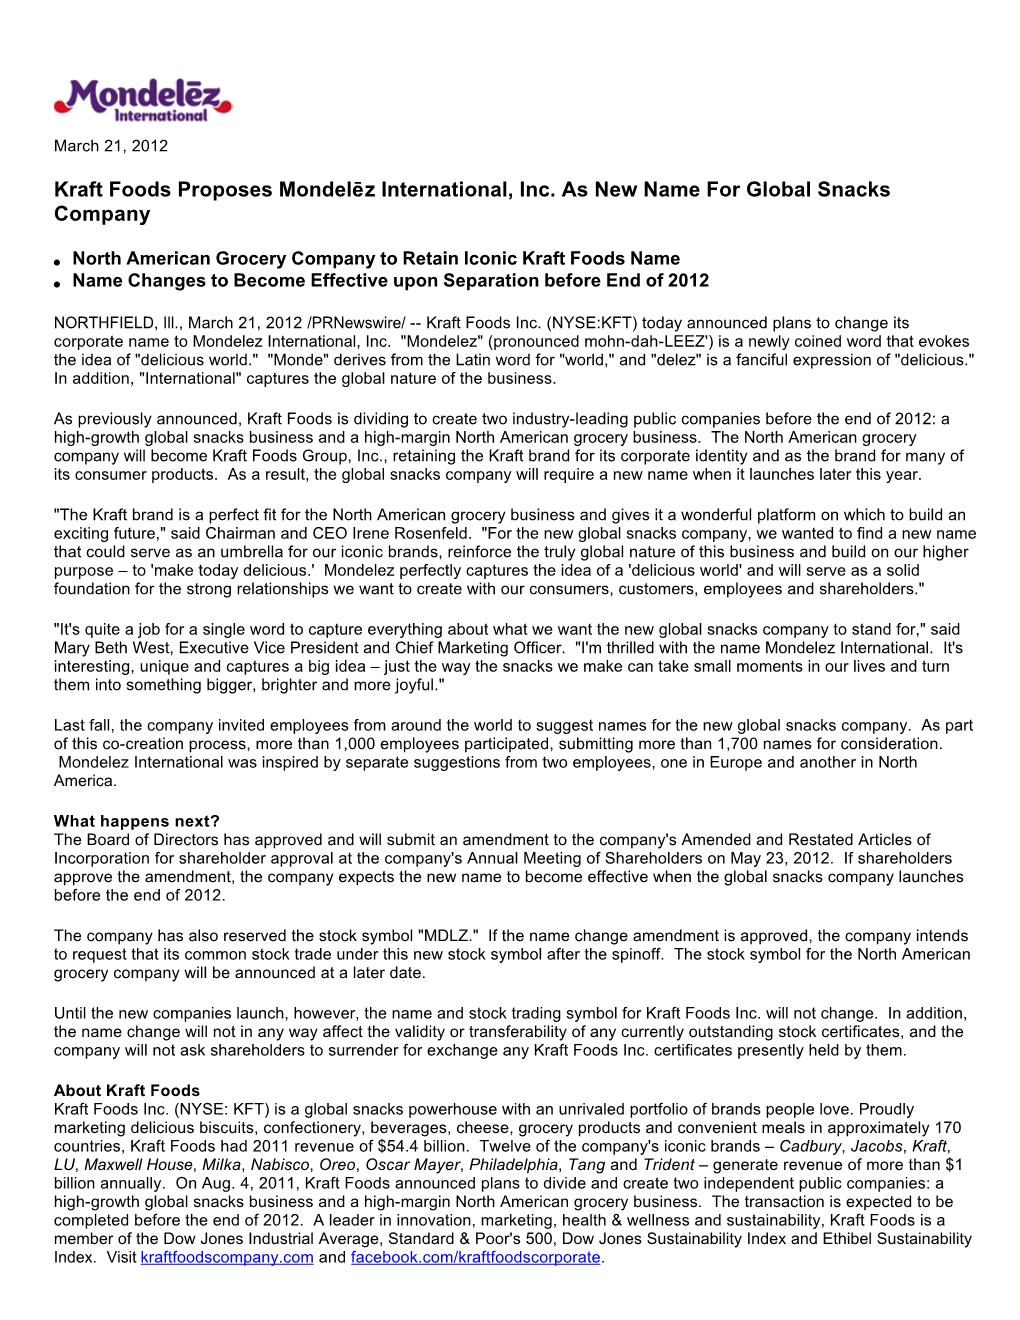 Kraft Foods Proposes Mondelēz International, Inc. As New Name for Global Snacks Company